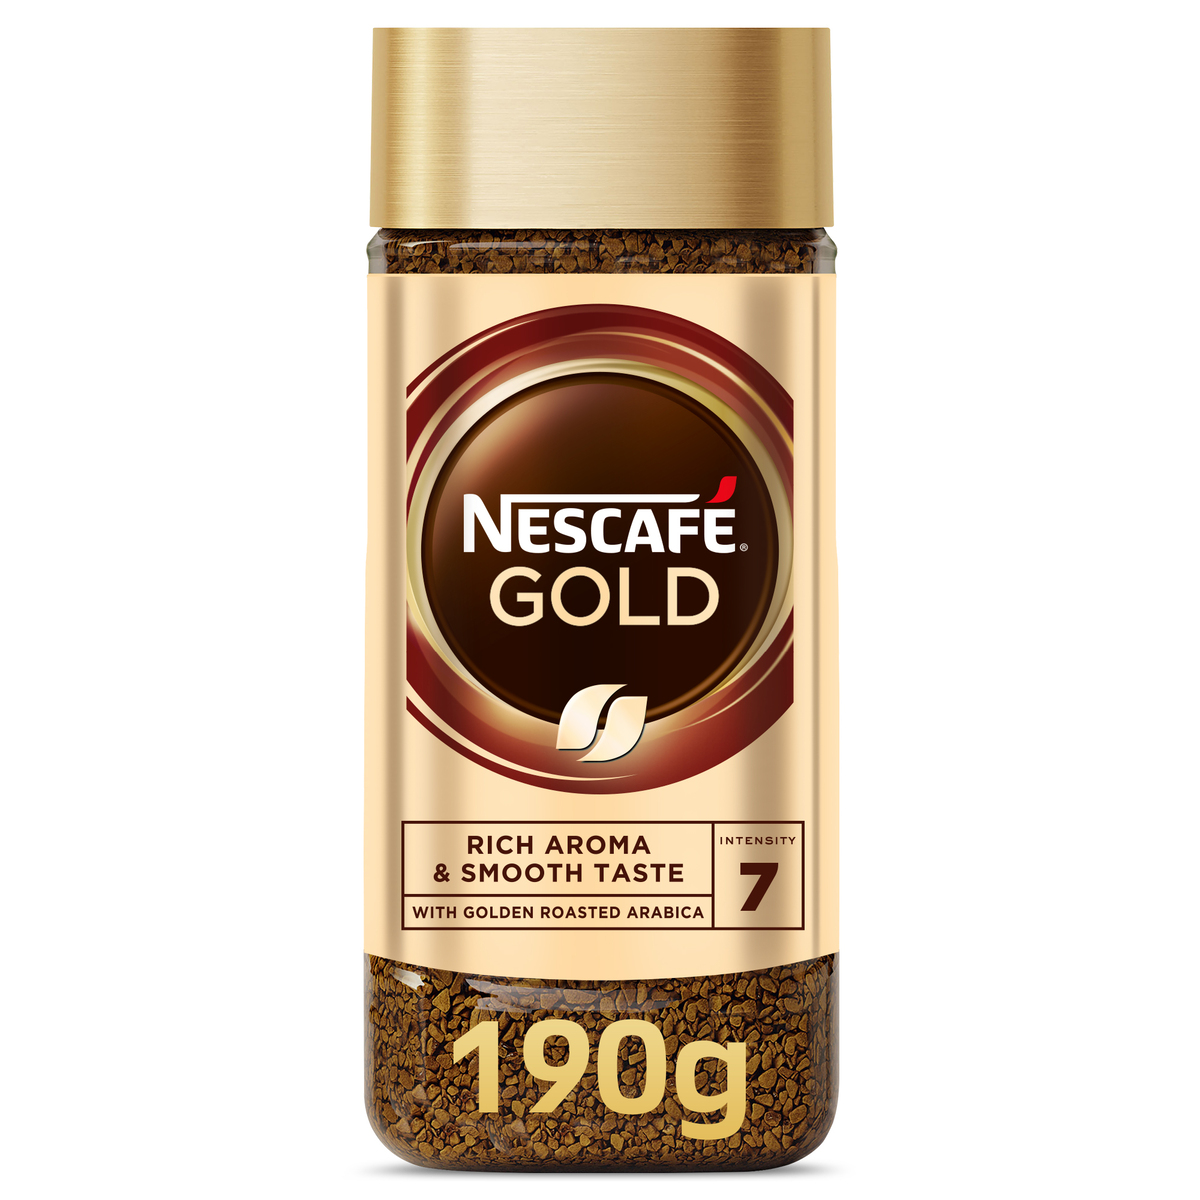 Nescafe Gold Rich Aroma & Smooth Taste Instant Coffee 190 g